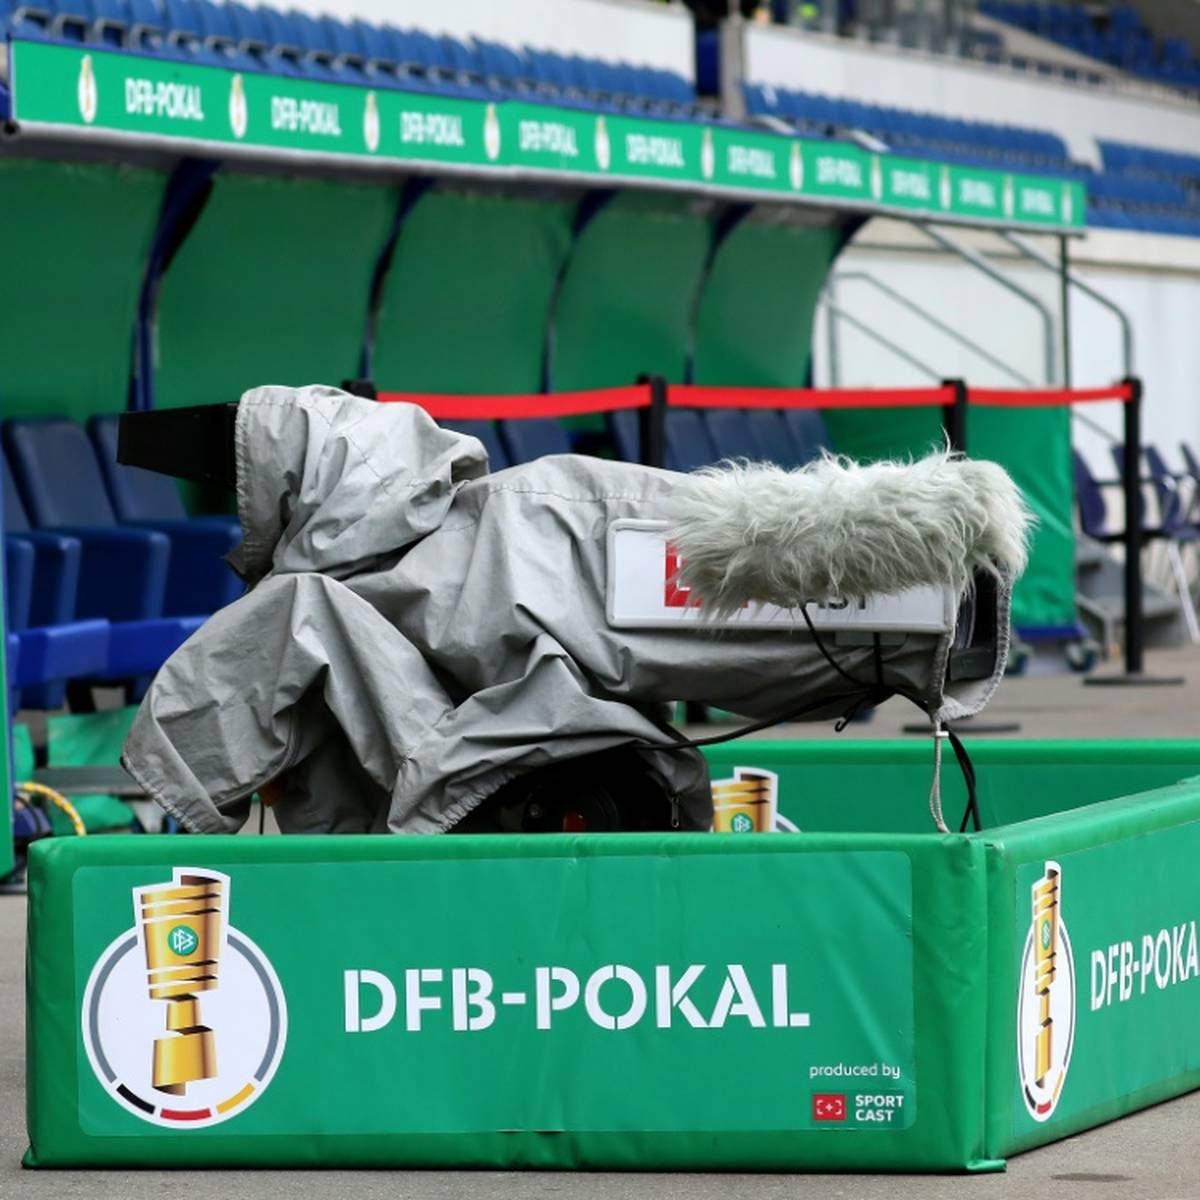 DFB-Pokal Digitalplattform OneFootball zeigt Partien im Ausland